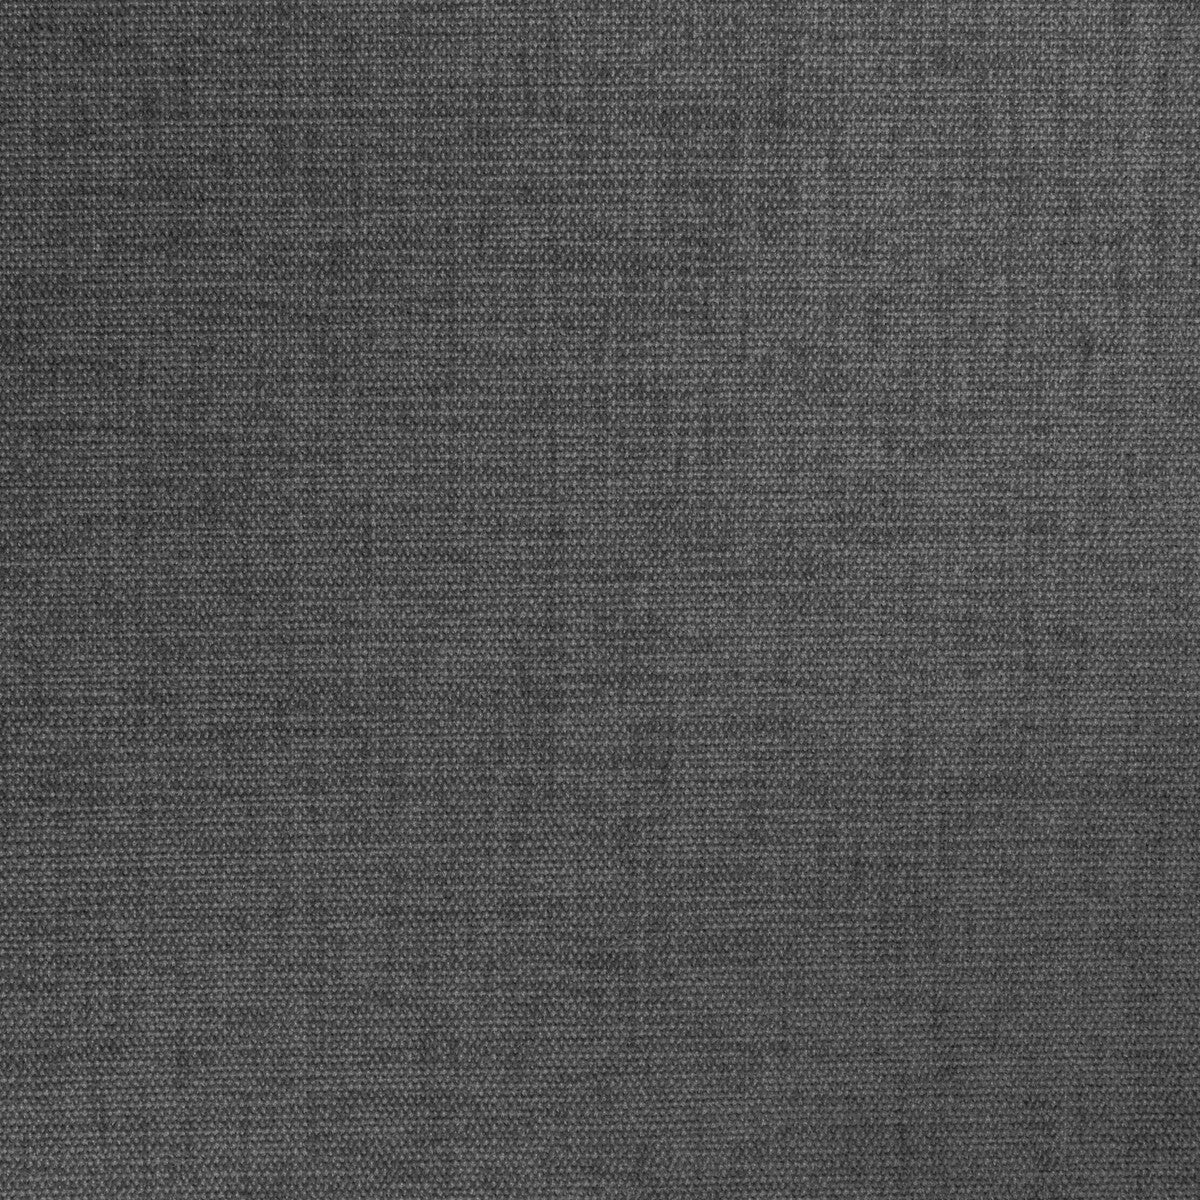 Kravet Smart fabric in 34959-1221 color - pattern 34959.1221.0 - by Kravet Smart in the Performance Kravetarmor collection